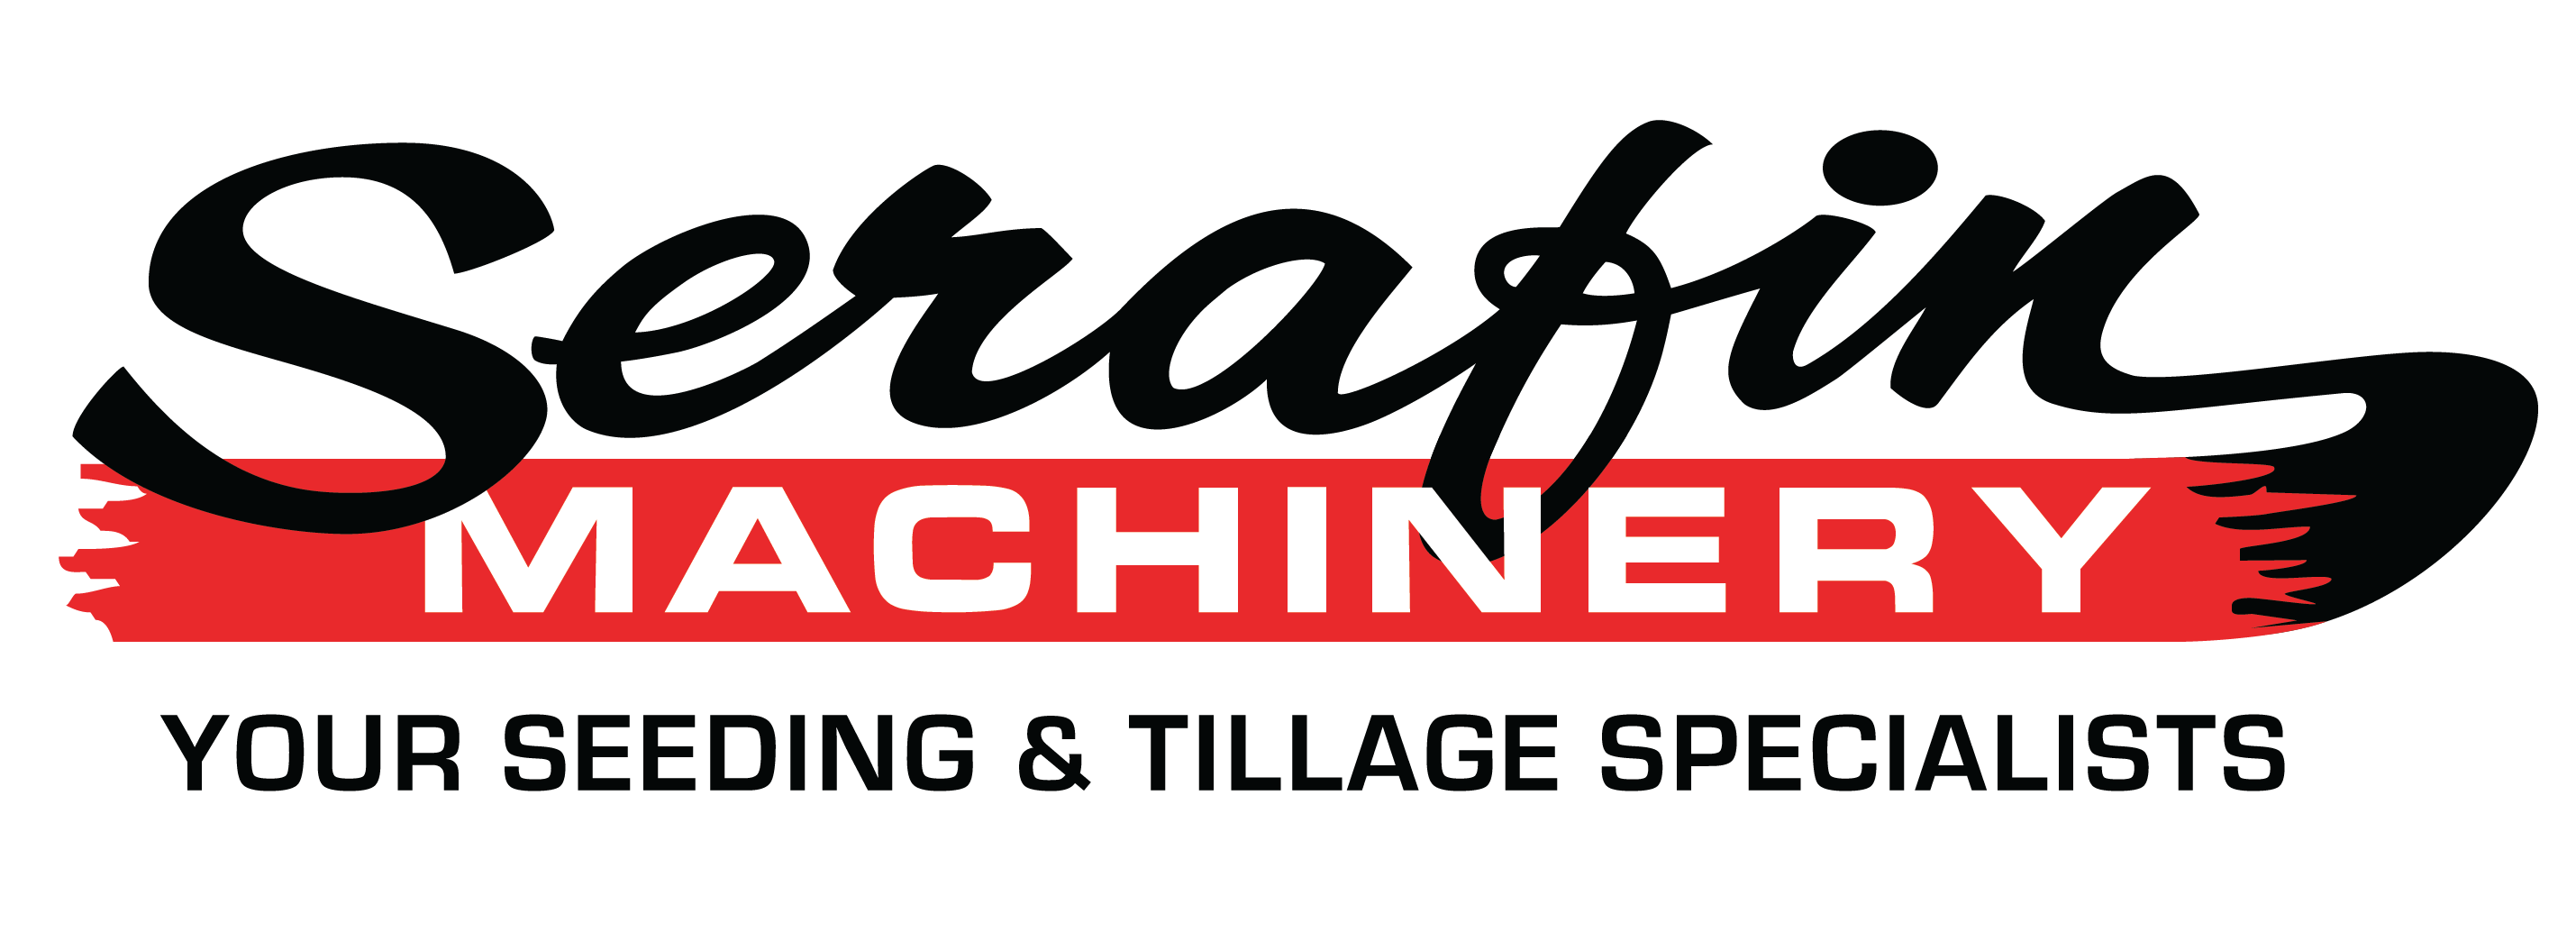 Serafin-Machinery-Logo_with-tagline